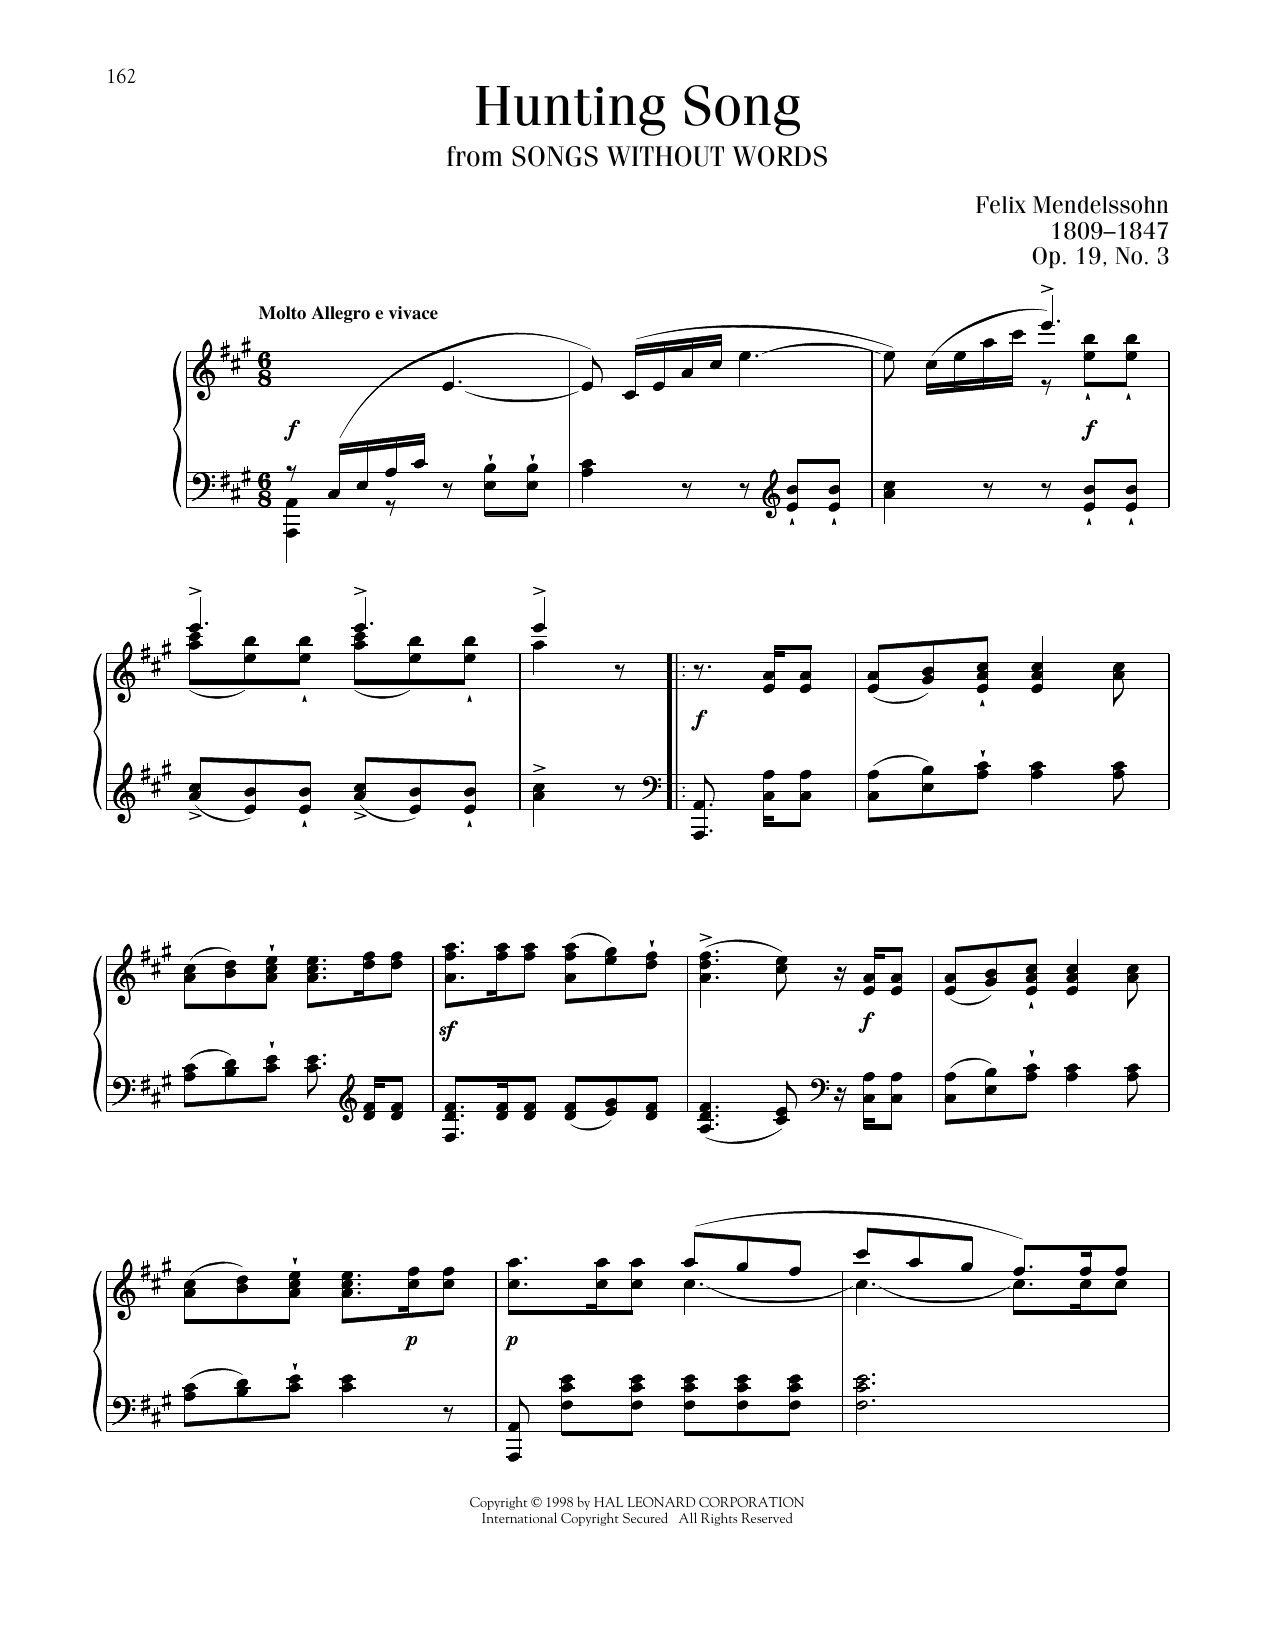 Felix Mendelssohn Song Without Words, Op. 19, No. 3 sheet music notes printable PDF score